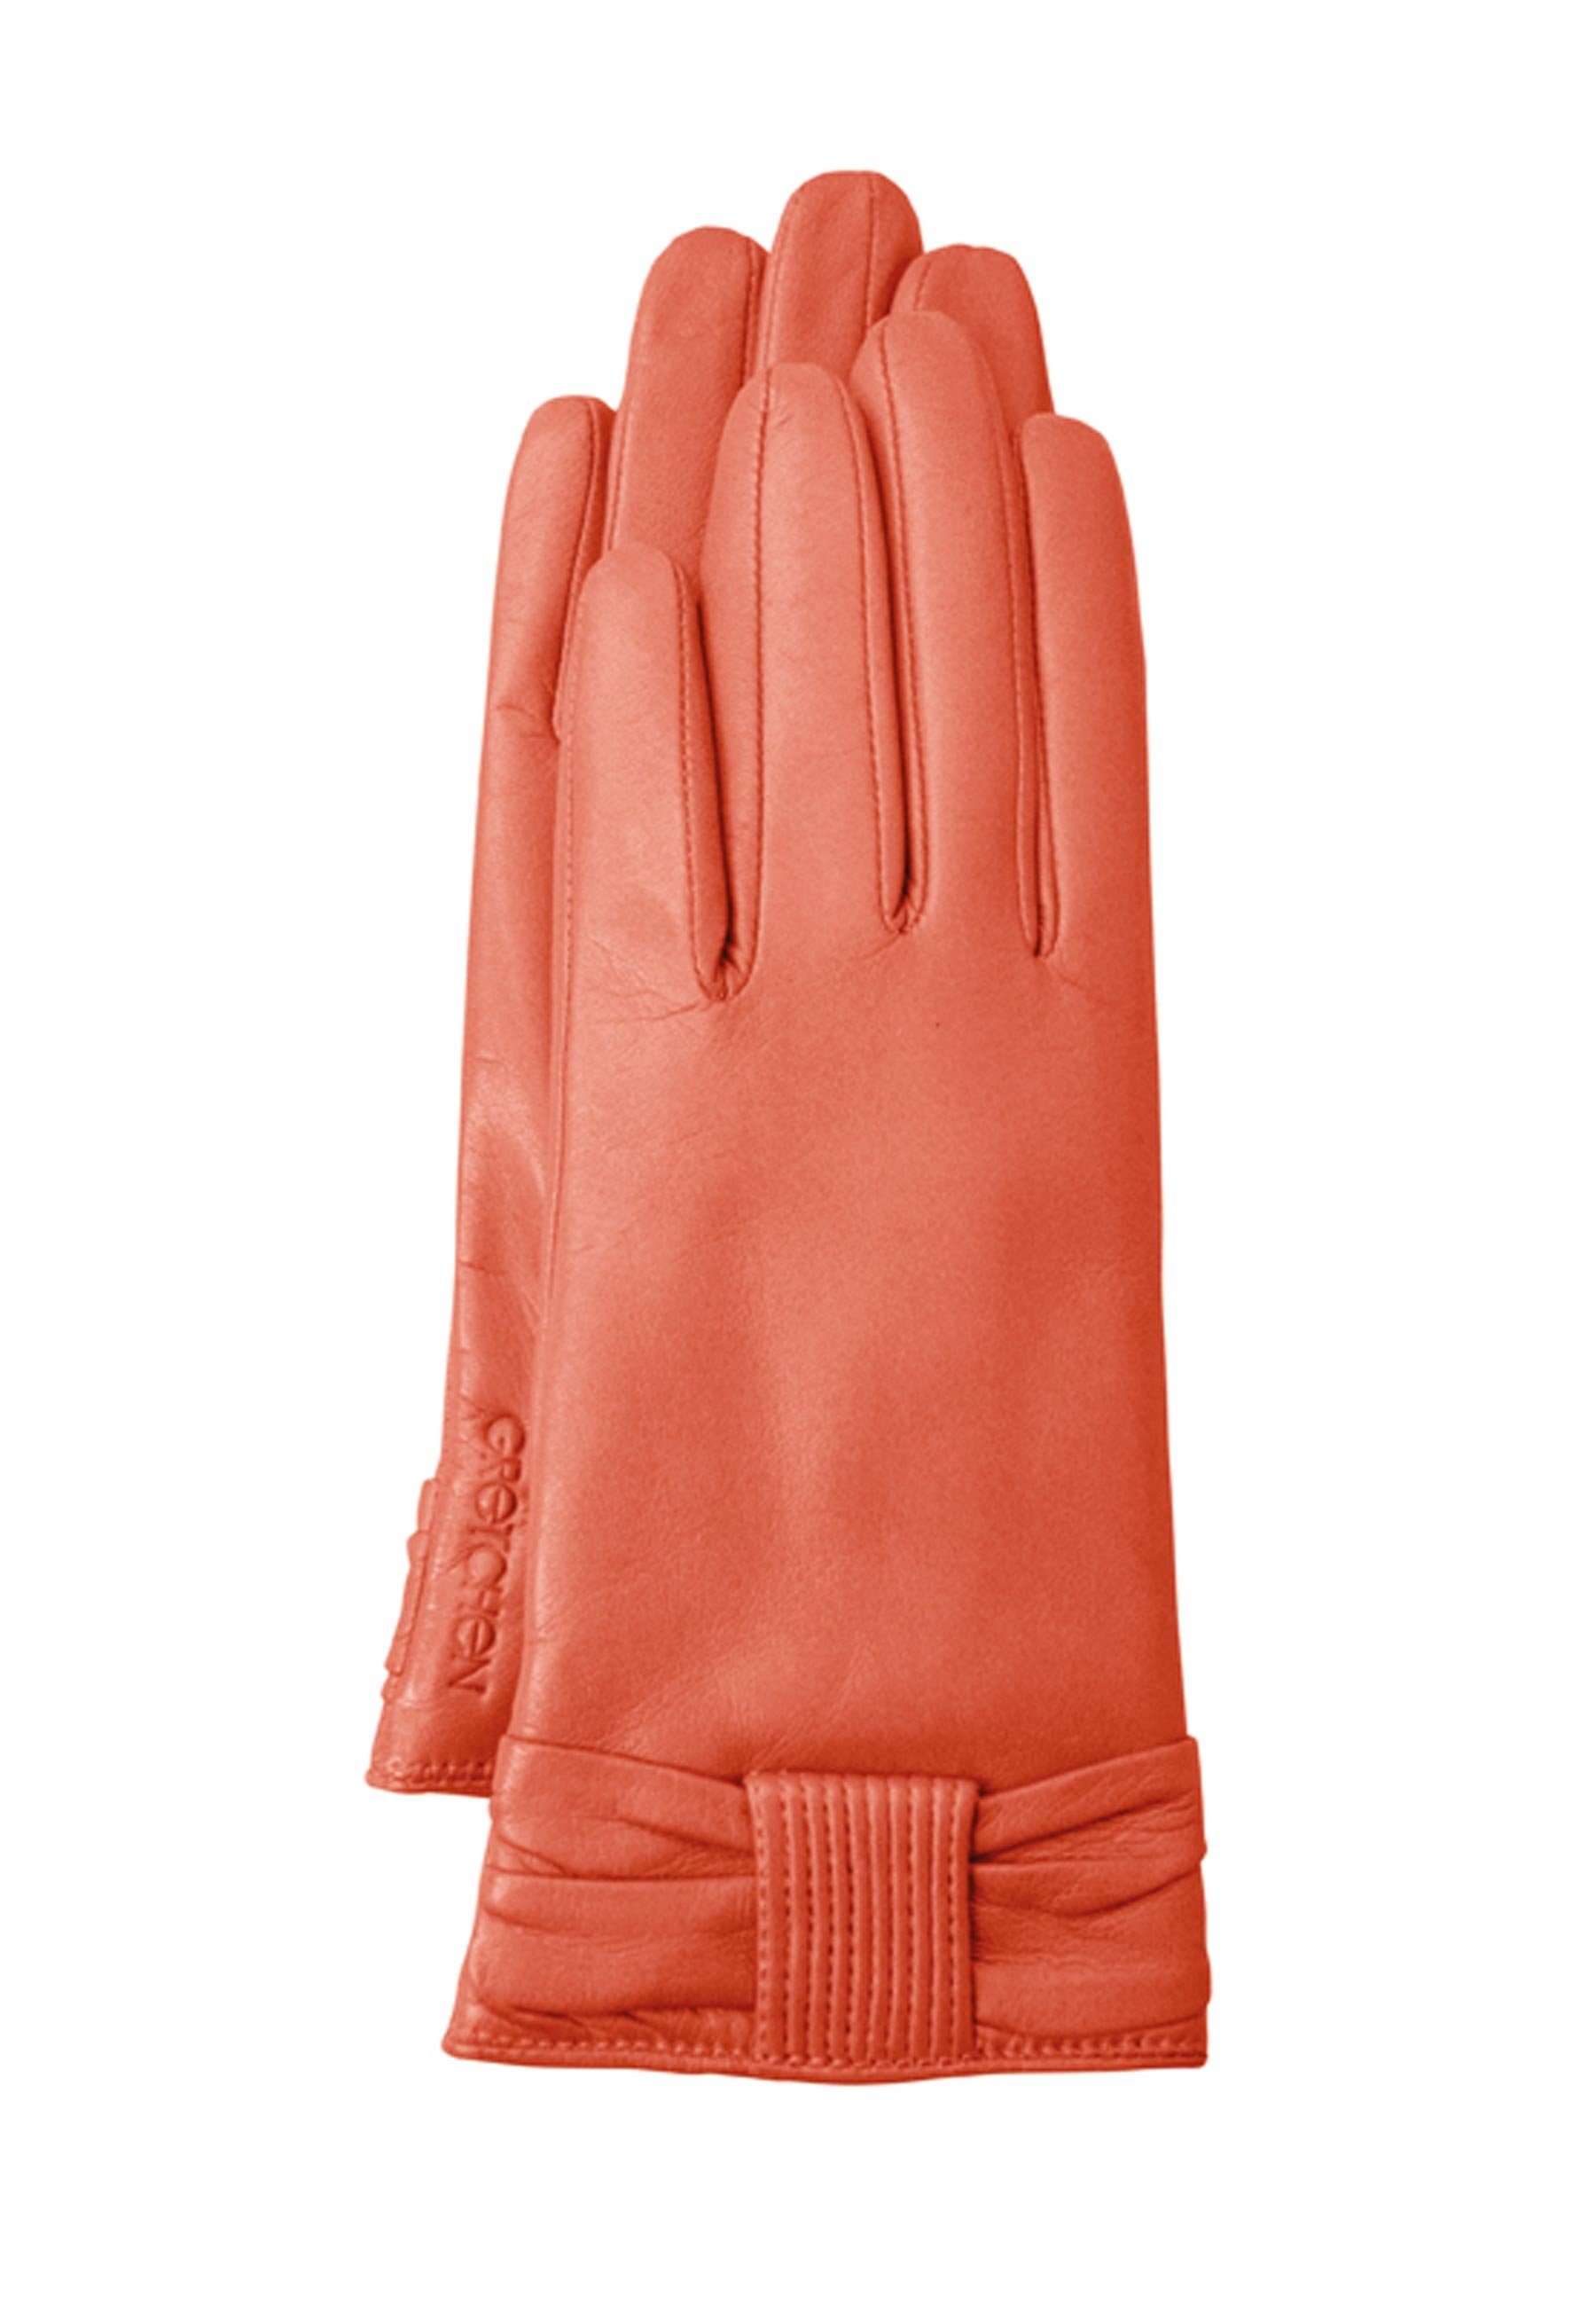 GRETCHEN Lederhandschuhe Bow Gloves mit kuscheligem Kaschmir-Futter orange | Handschuhe